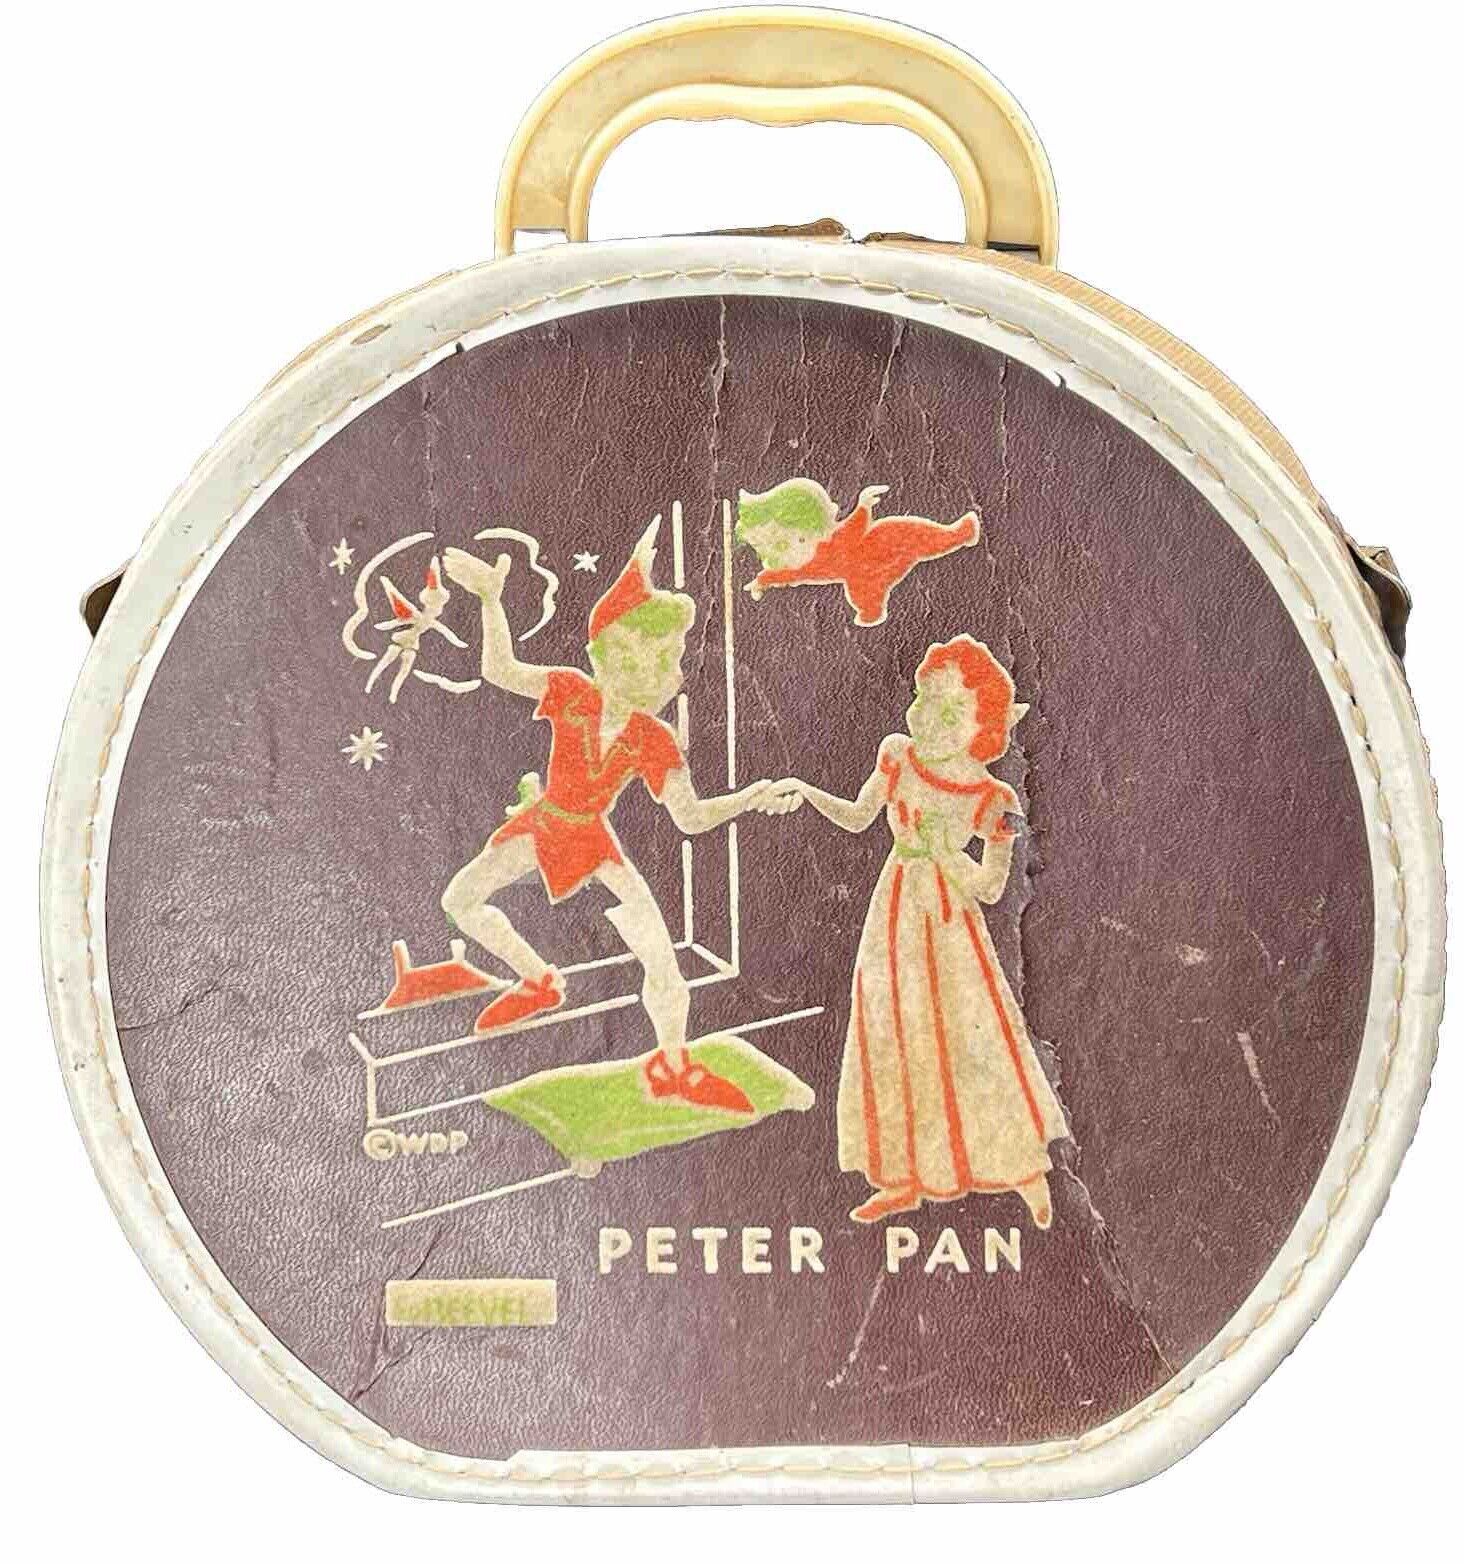 Neevel Peter Pan Travel Tot Toys Carrying Case Disney WDP Wendy Michael Vintage